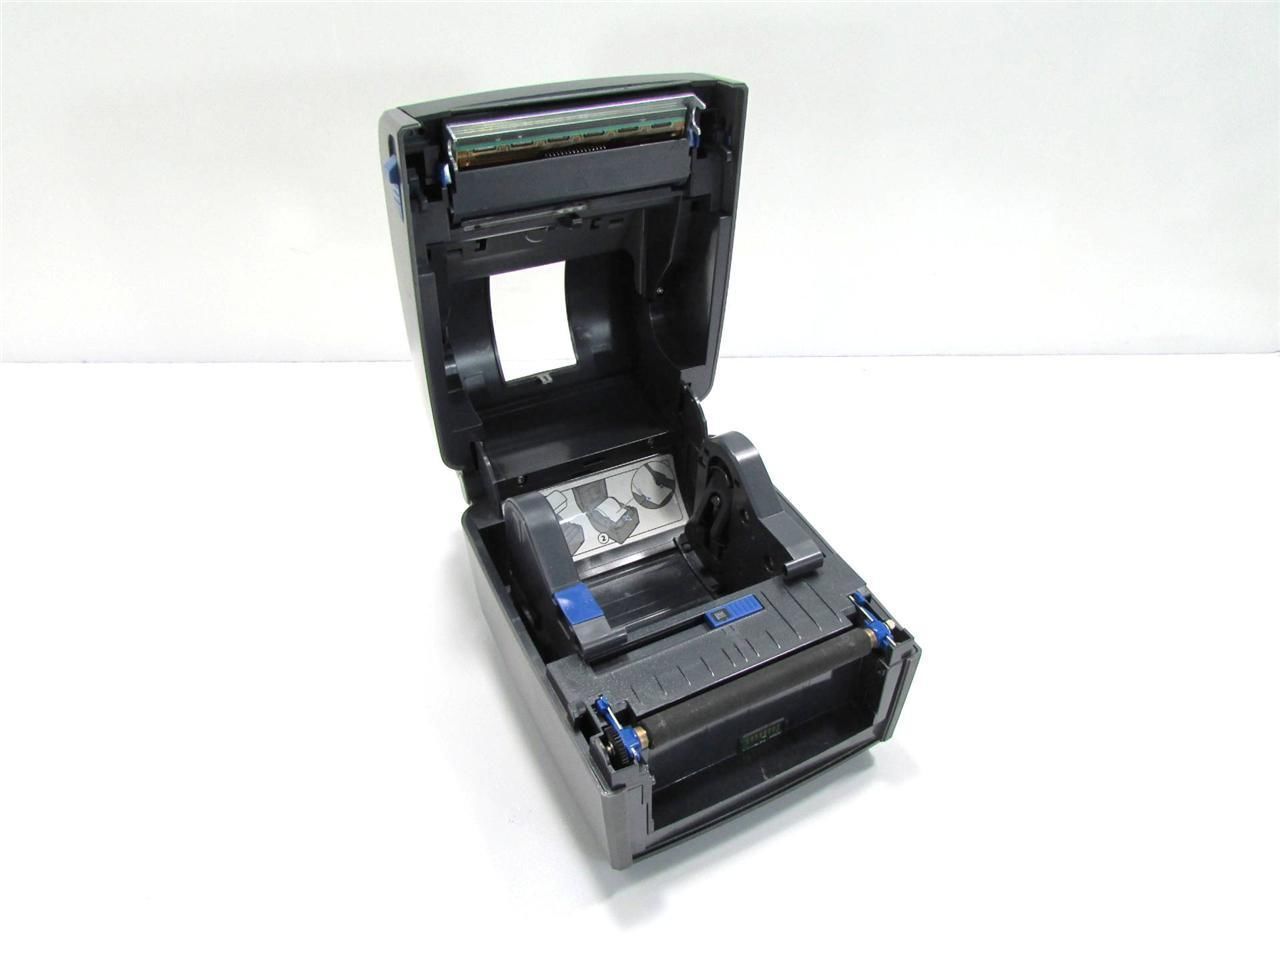 Honeywell PC43d DT Desktop Printer-RTC-Adjustable Gap Sensor-203 dpi